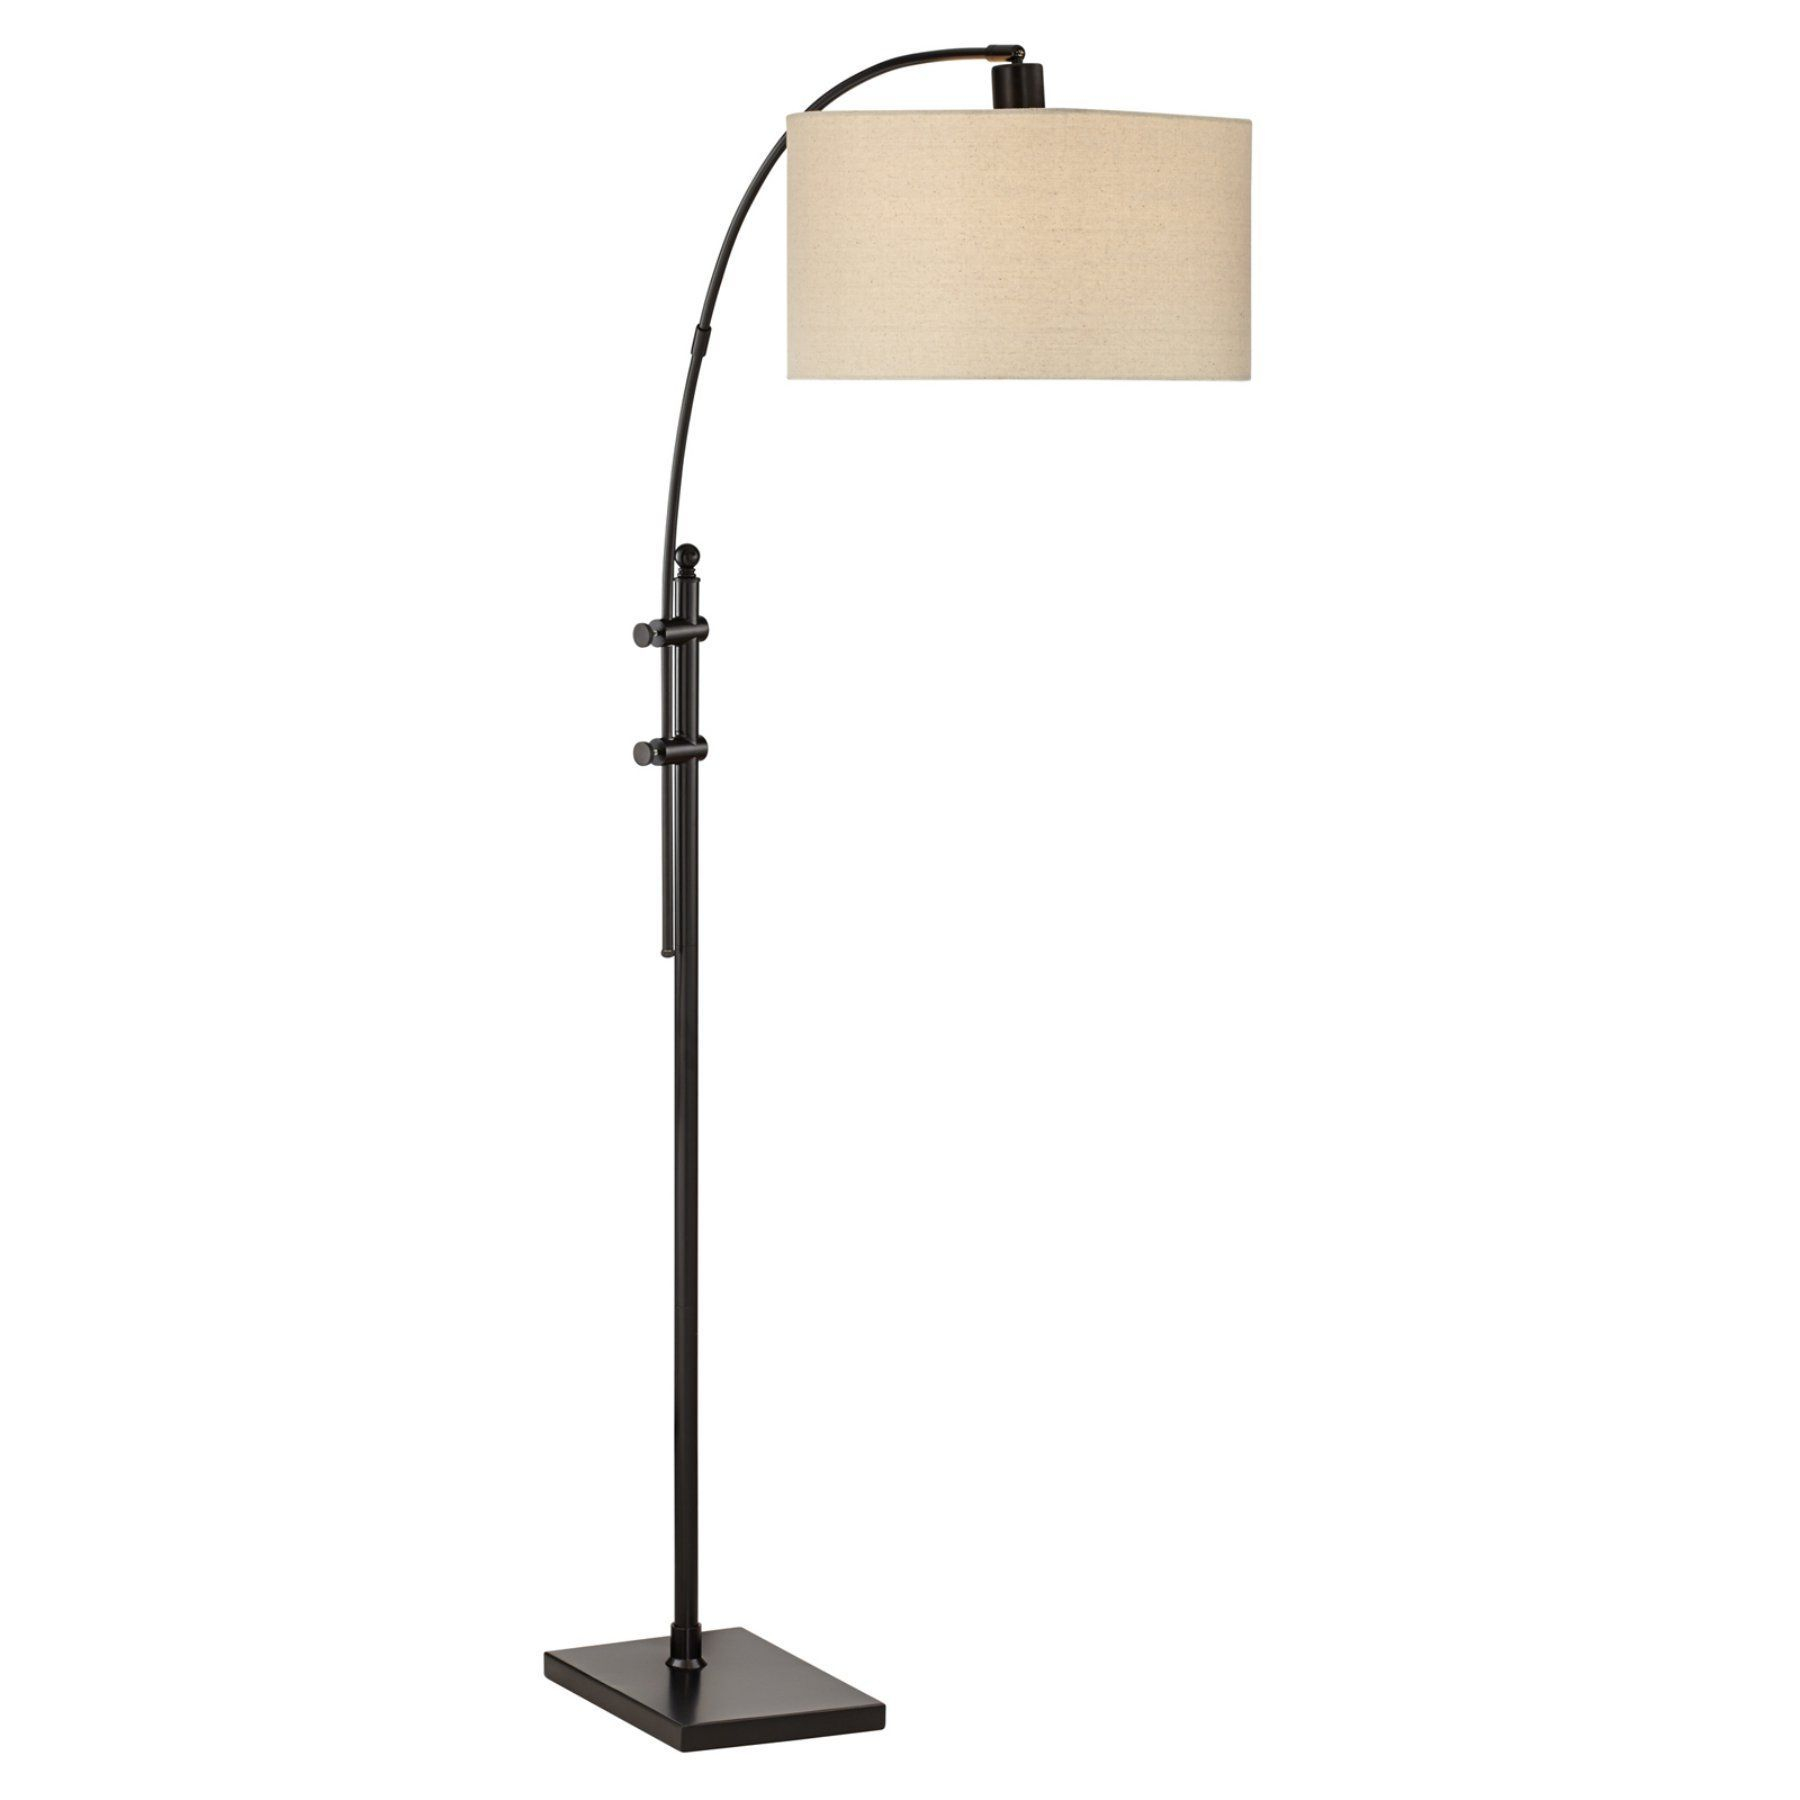 Kathy Ireland Spotlight Winston Road 85 3161 07 Floor Lamp intended for proportions 1800 X 1800